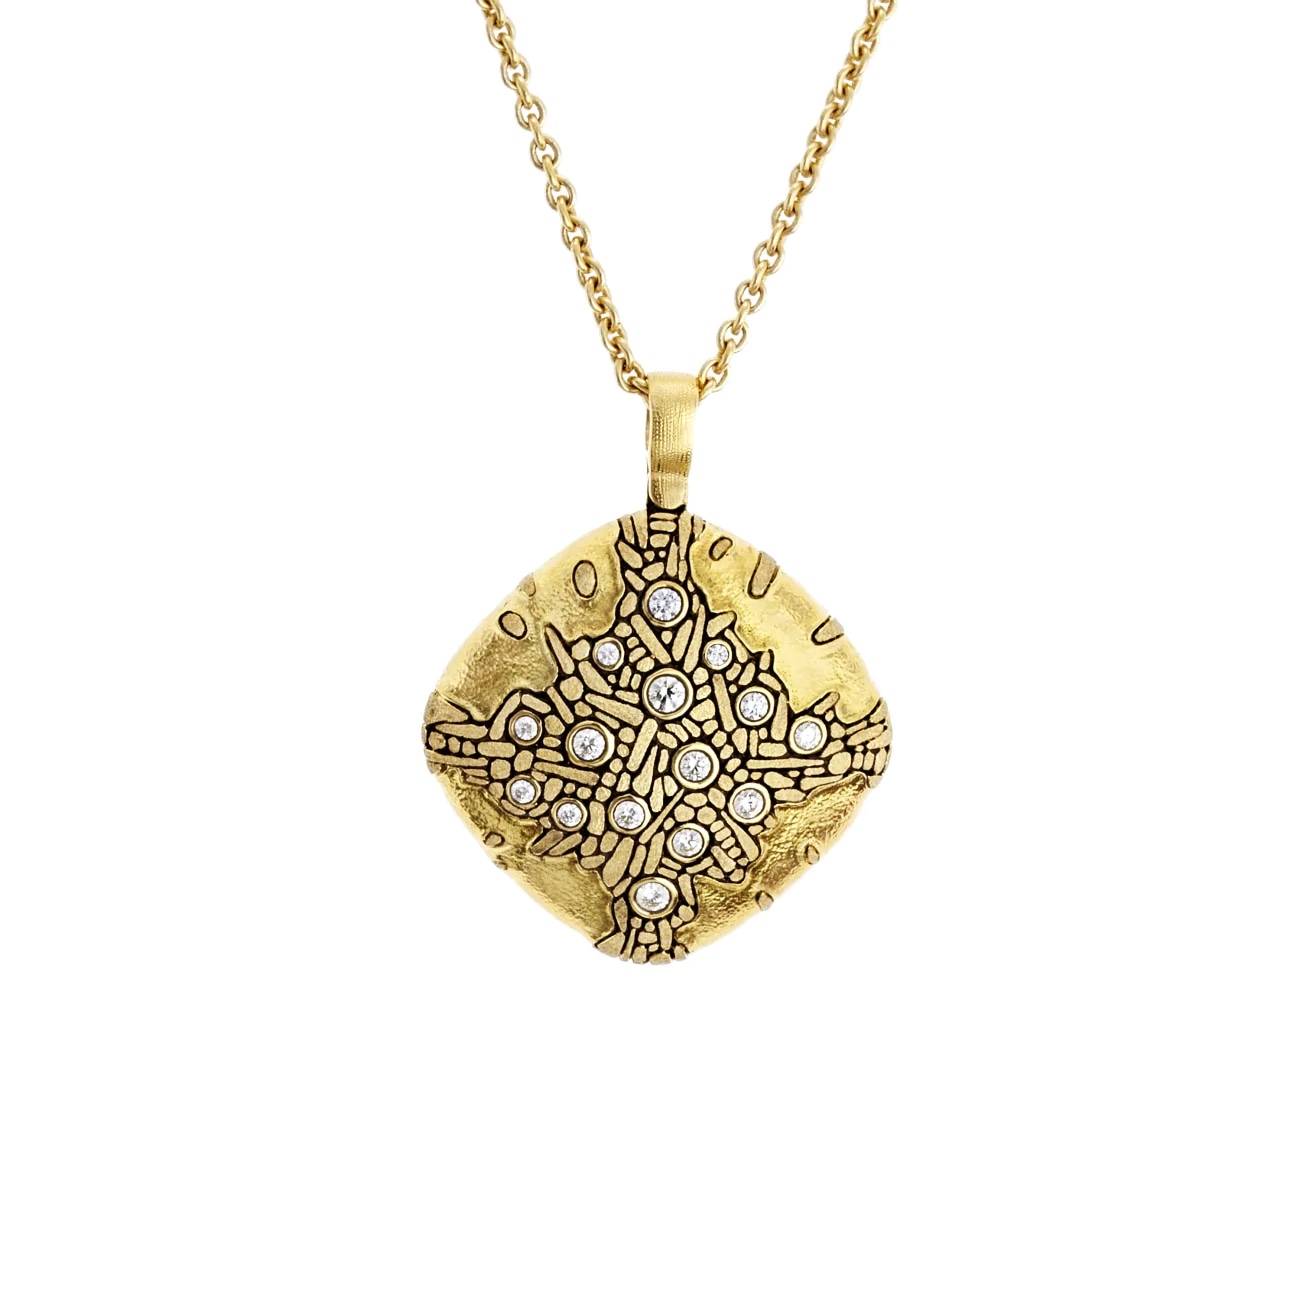 Alex Sepkus 18k Yellow Gold Diamond Pendant 